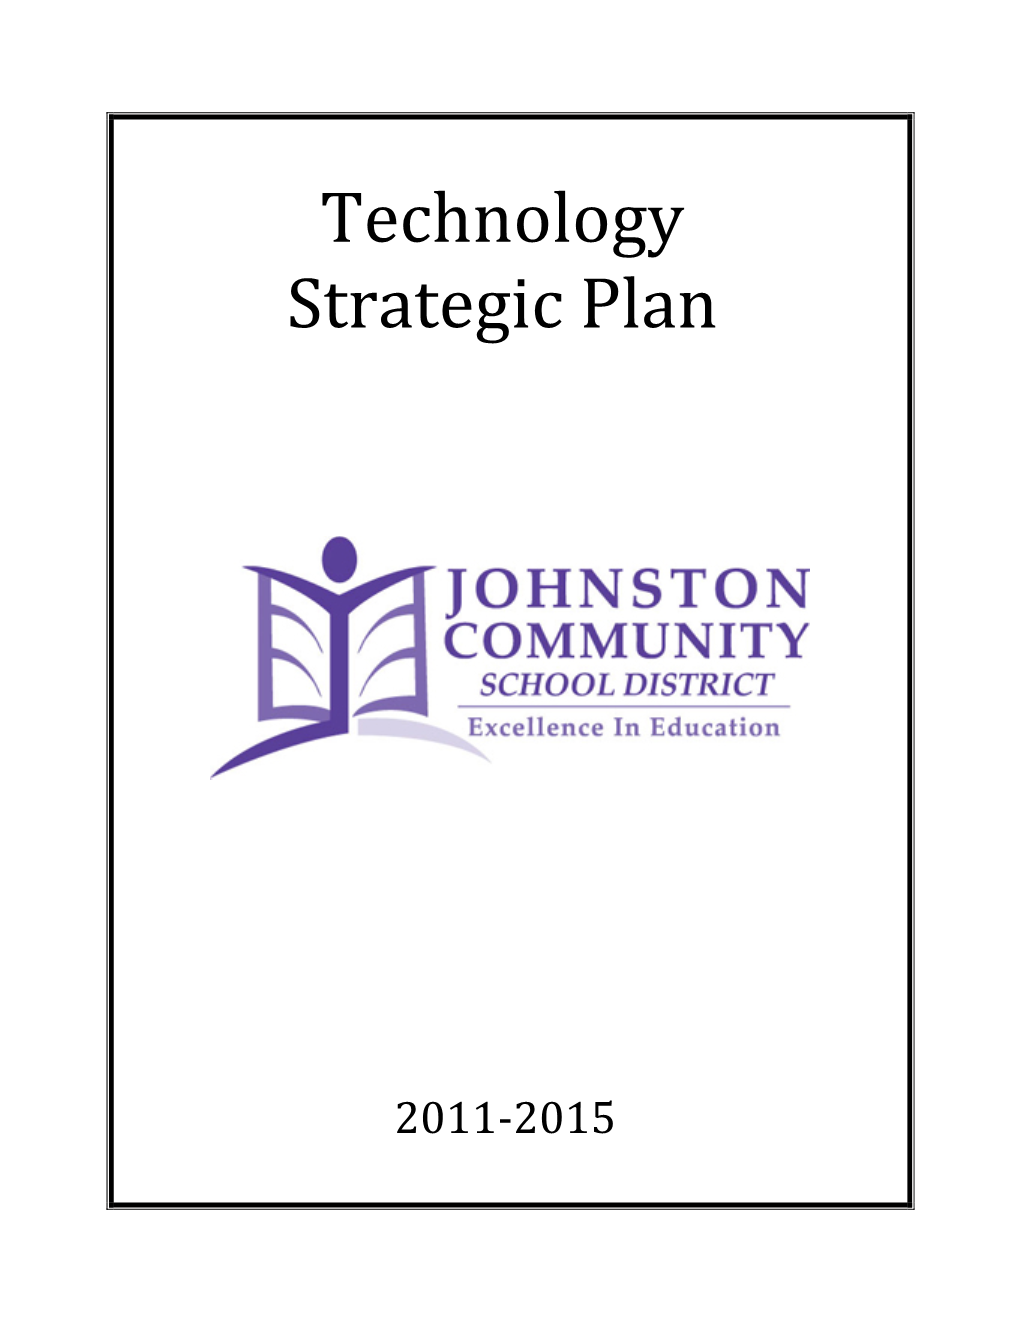 Technology Strategic Plan Executive Summary